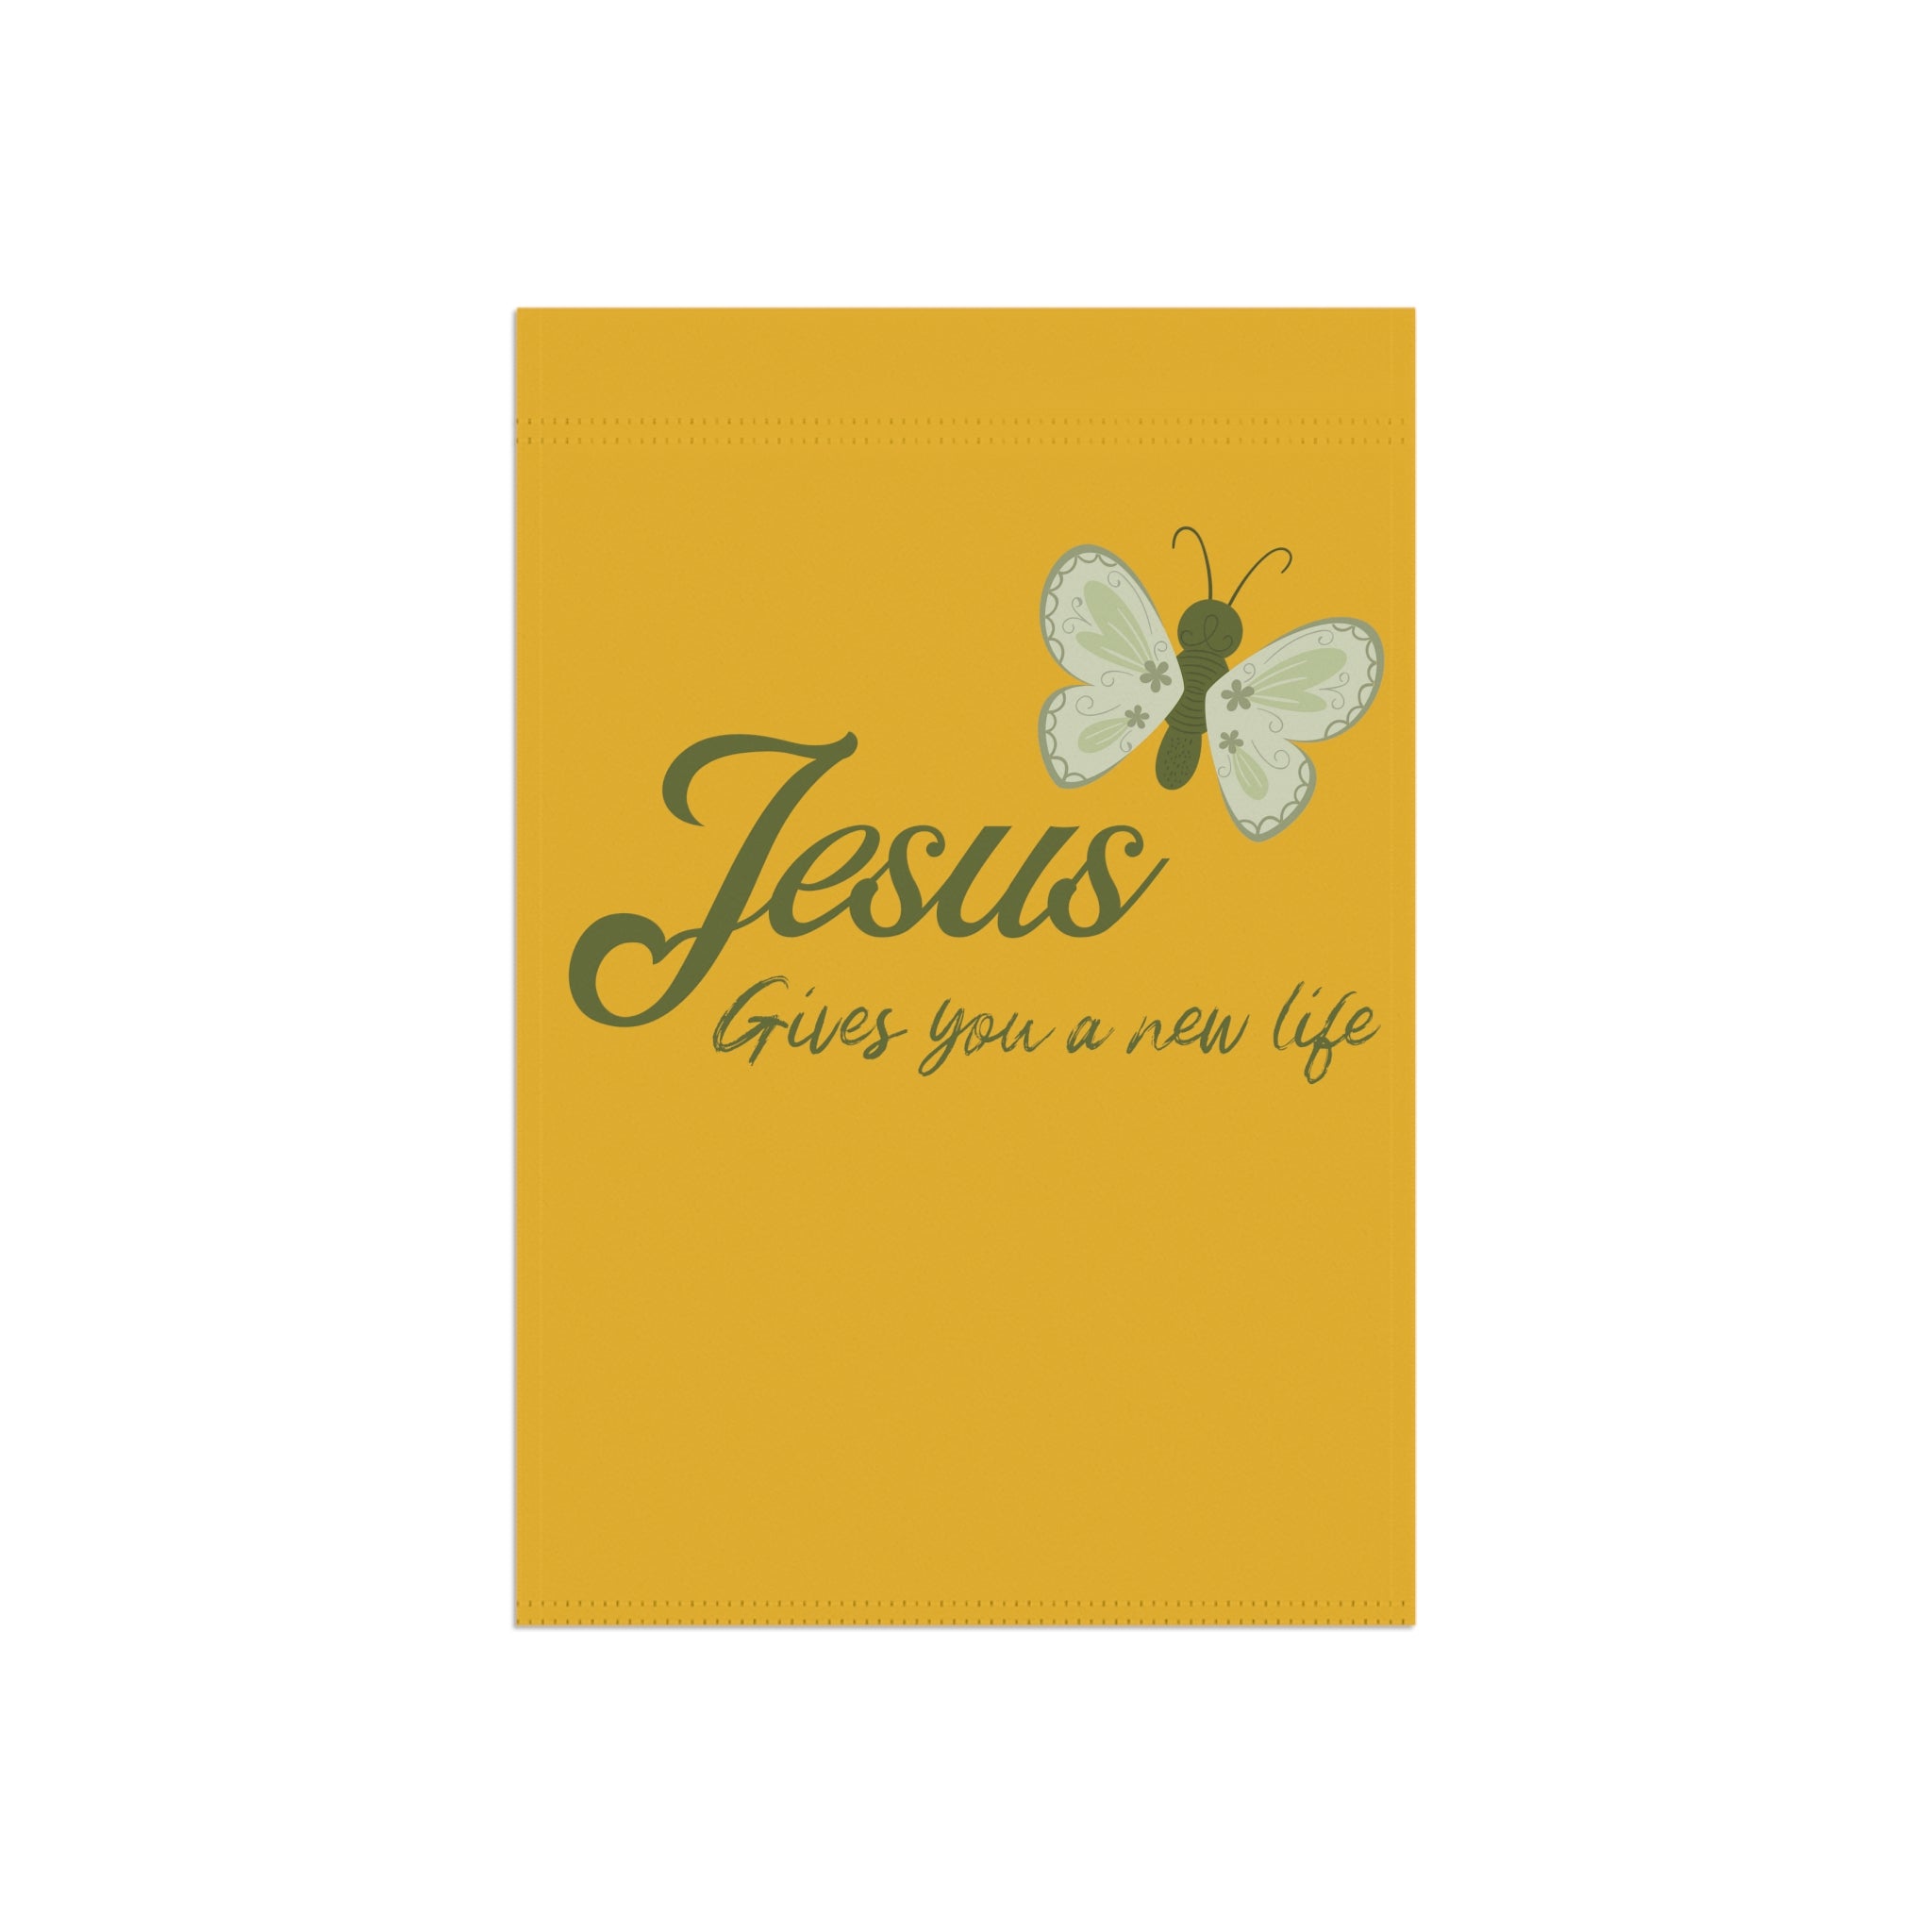 Jesus gives you a new life garden flag